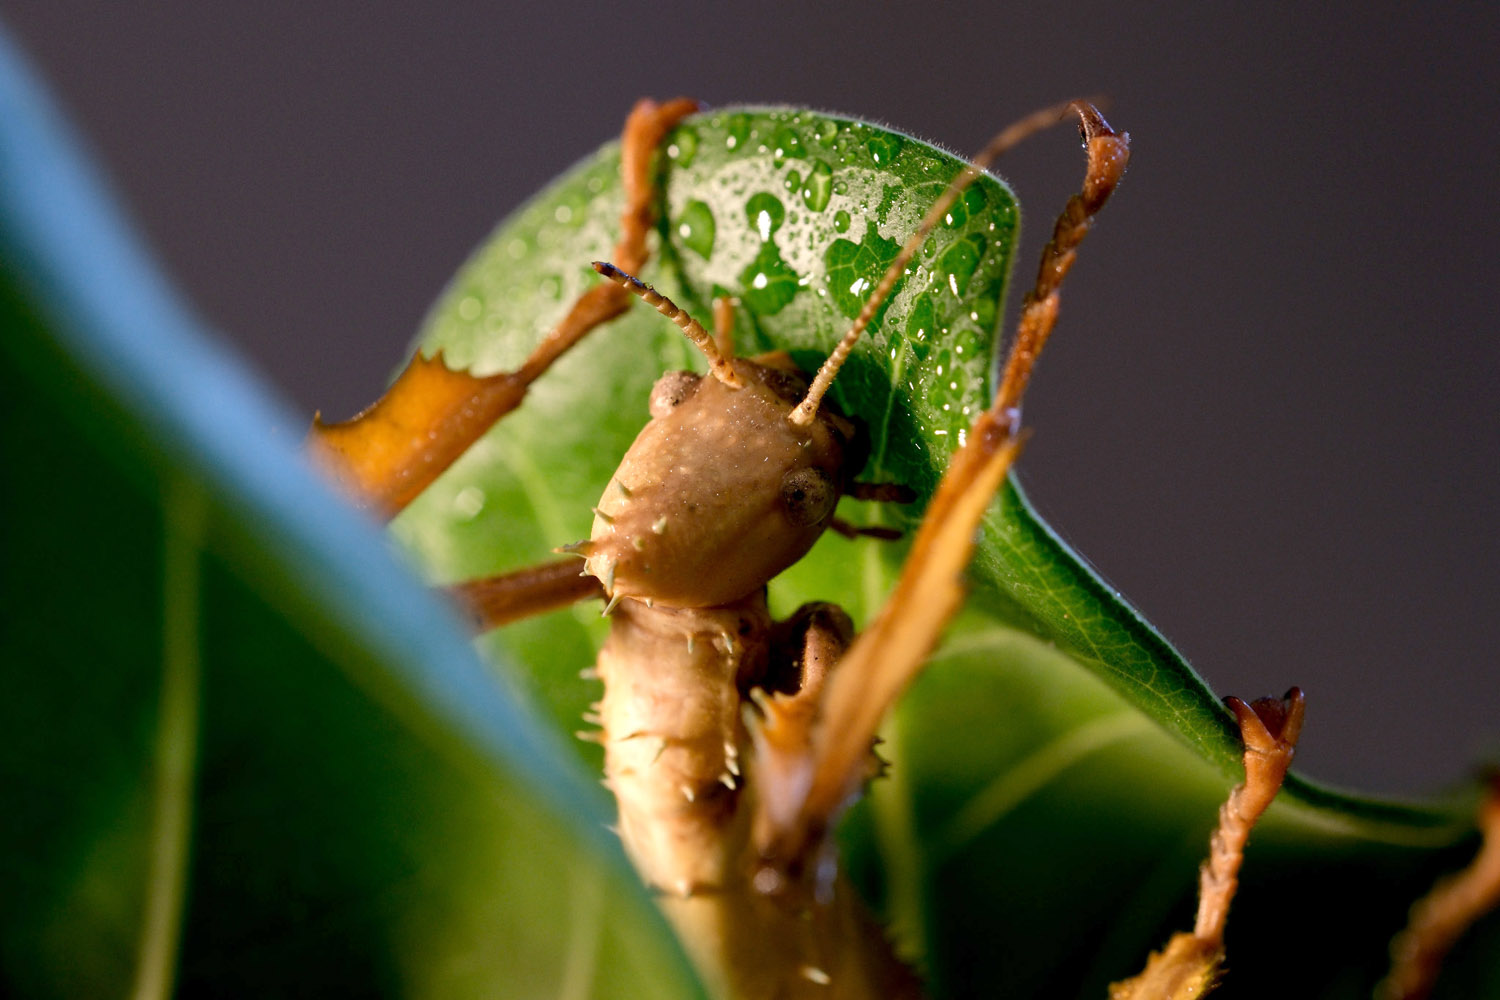 Fujifilm X-T5 camera samples leaf stick insect